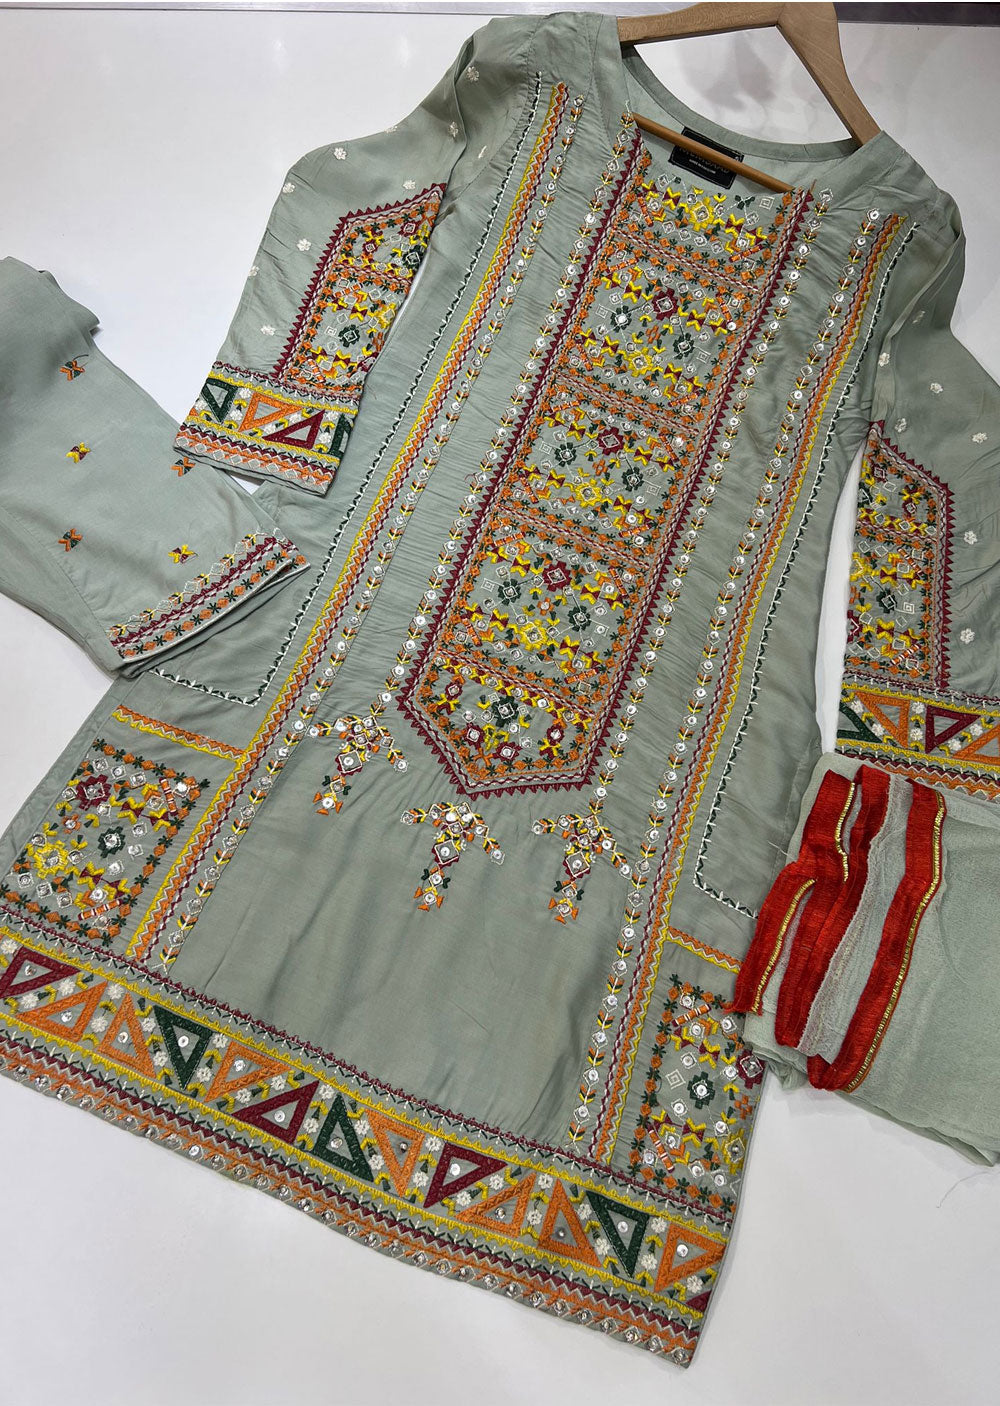 HK148 Afghani Mint Readymade Linen Suit - Memsaab Online